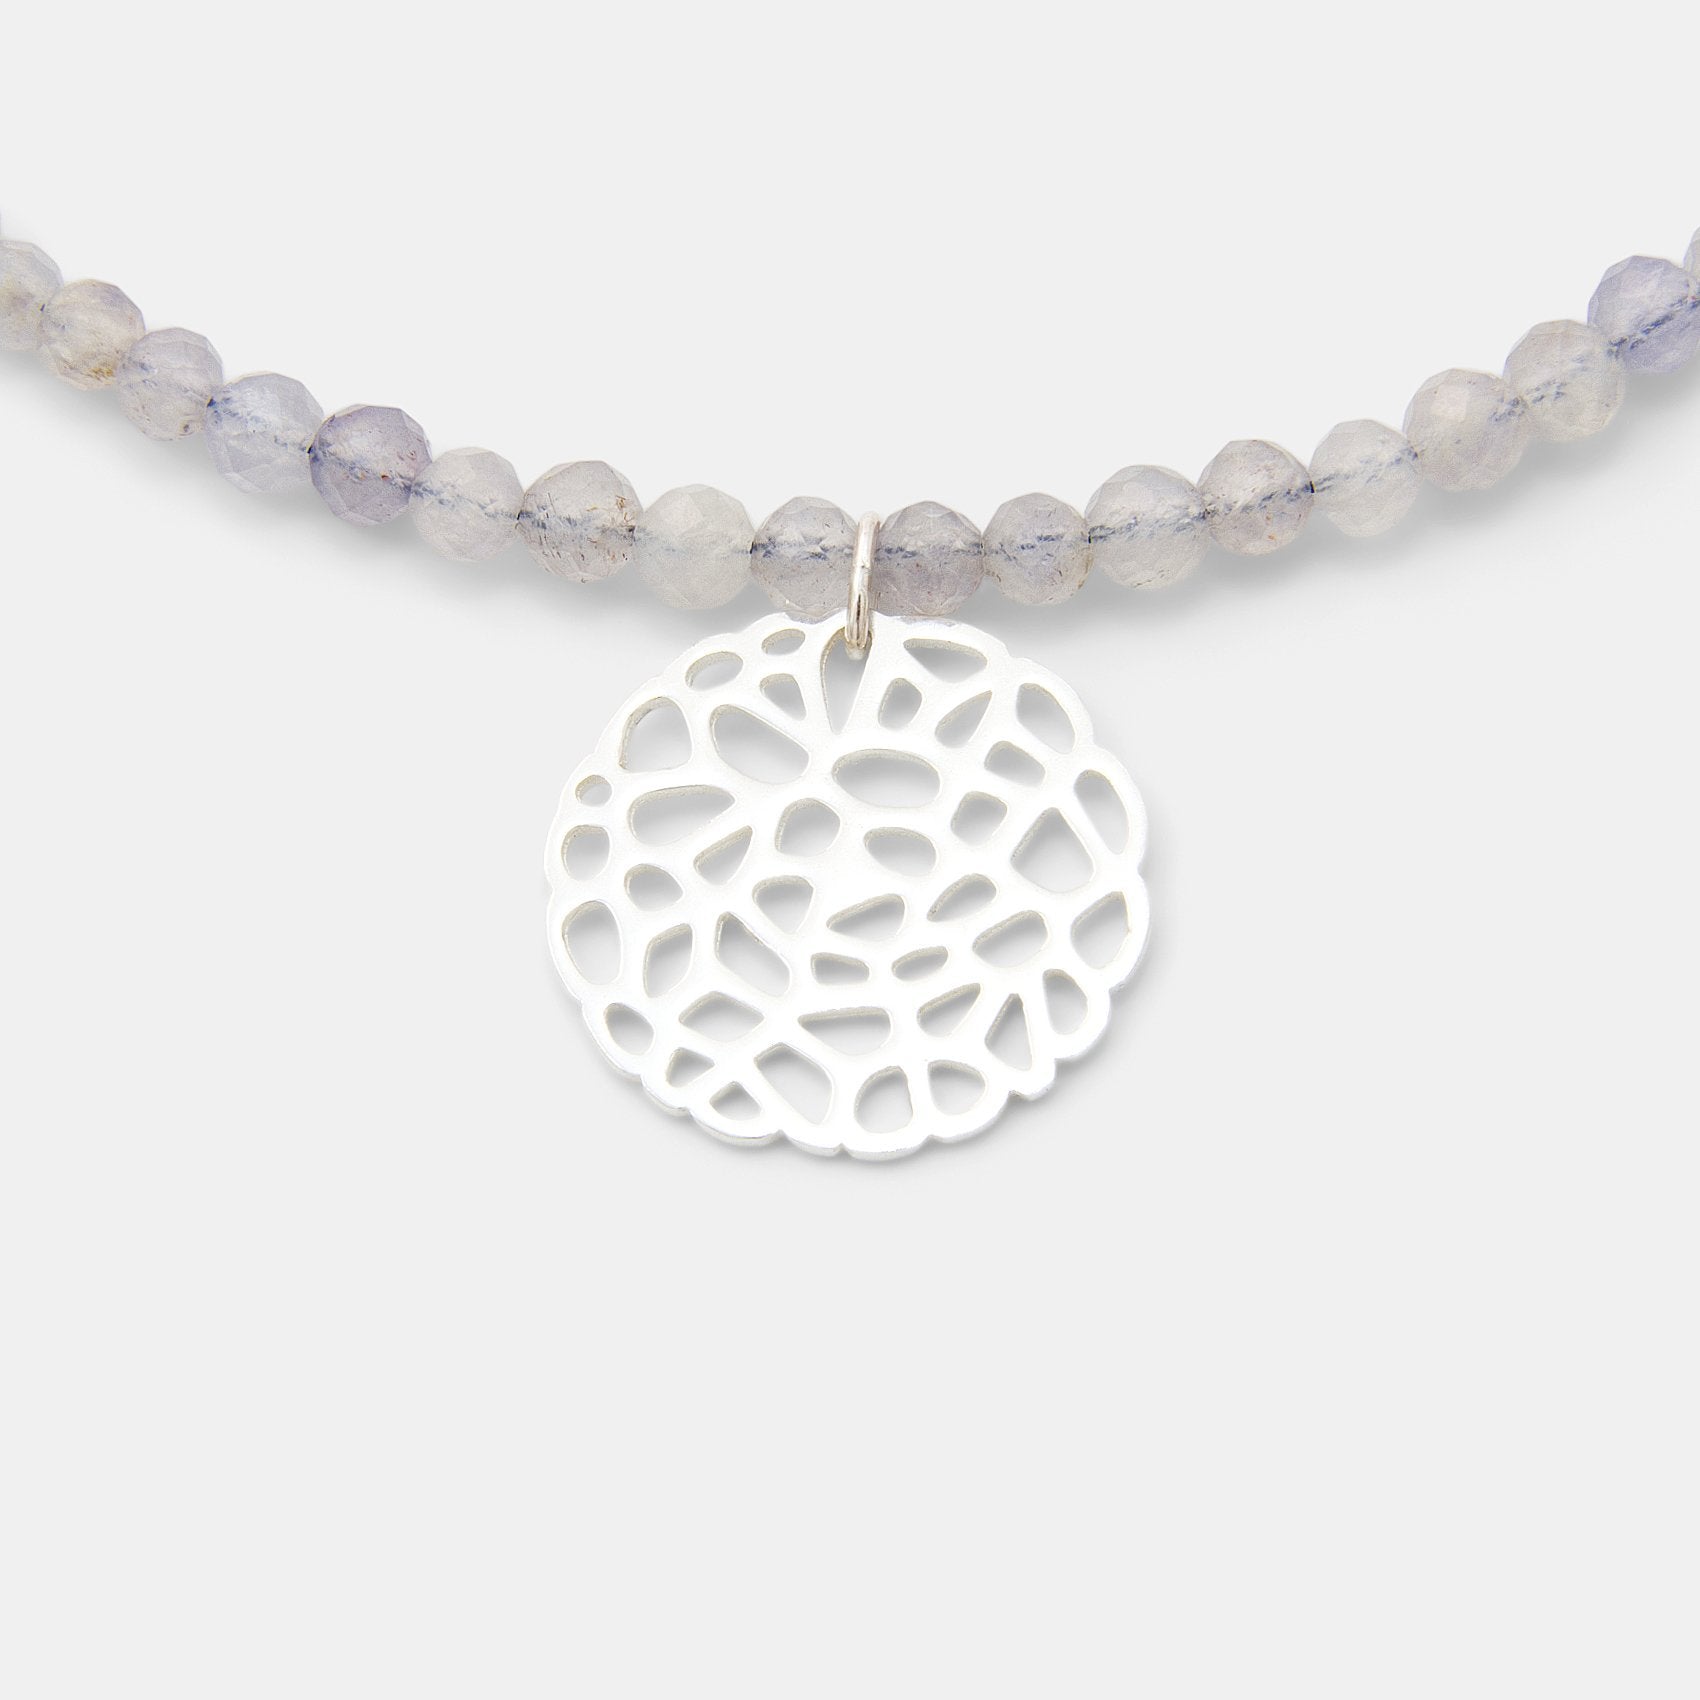 Coral pendant on iolite beaded necklace - Simone Walsh Jewellery Australia